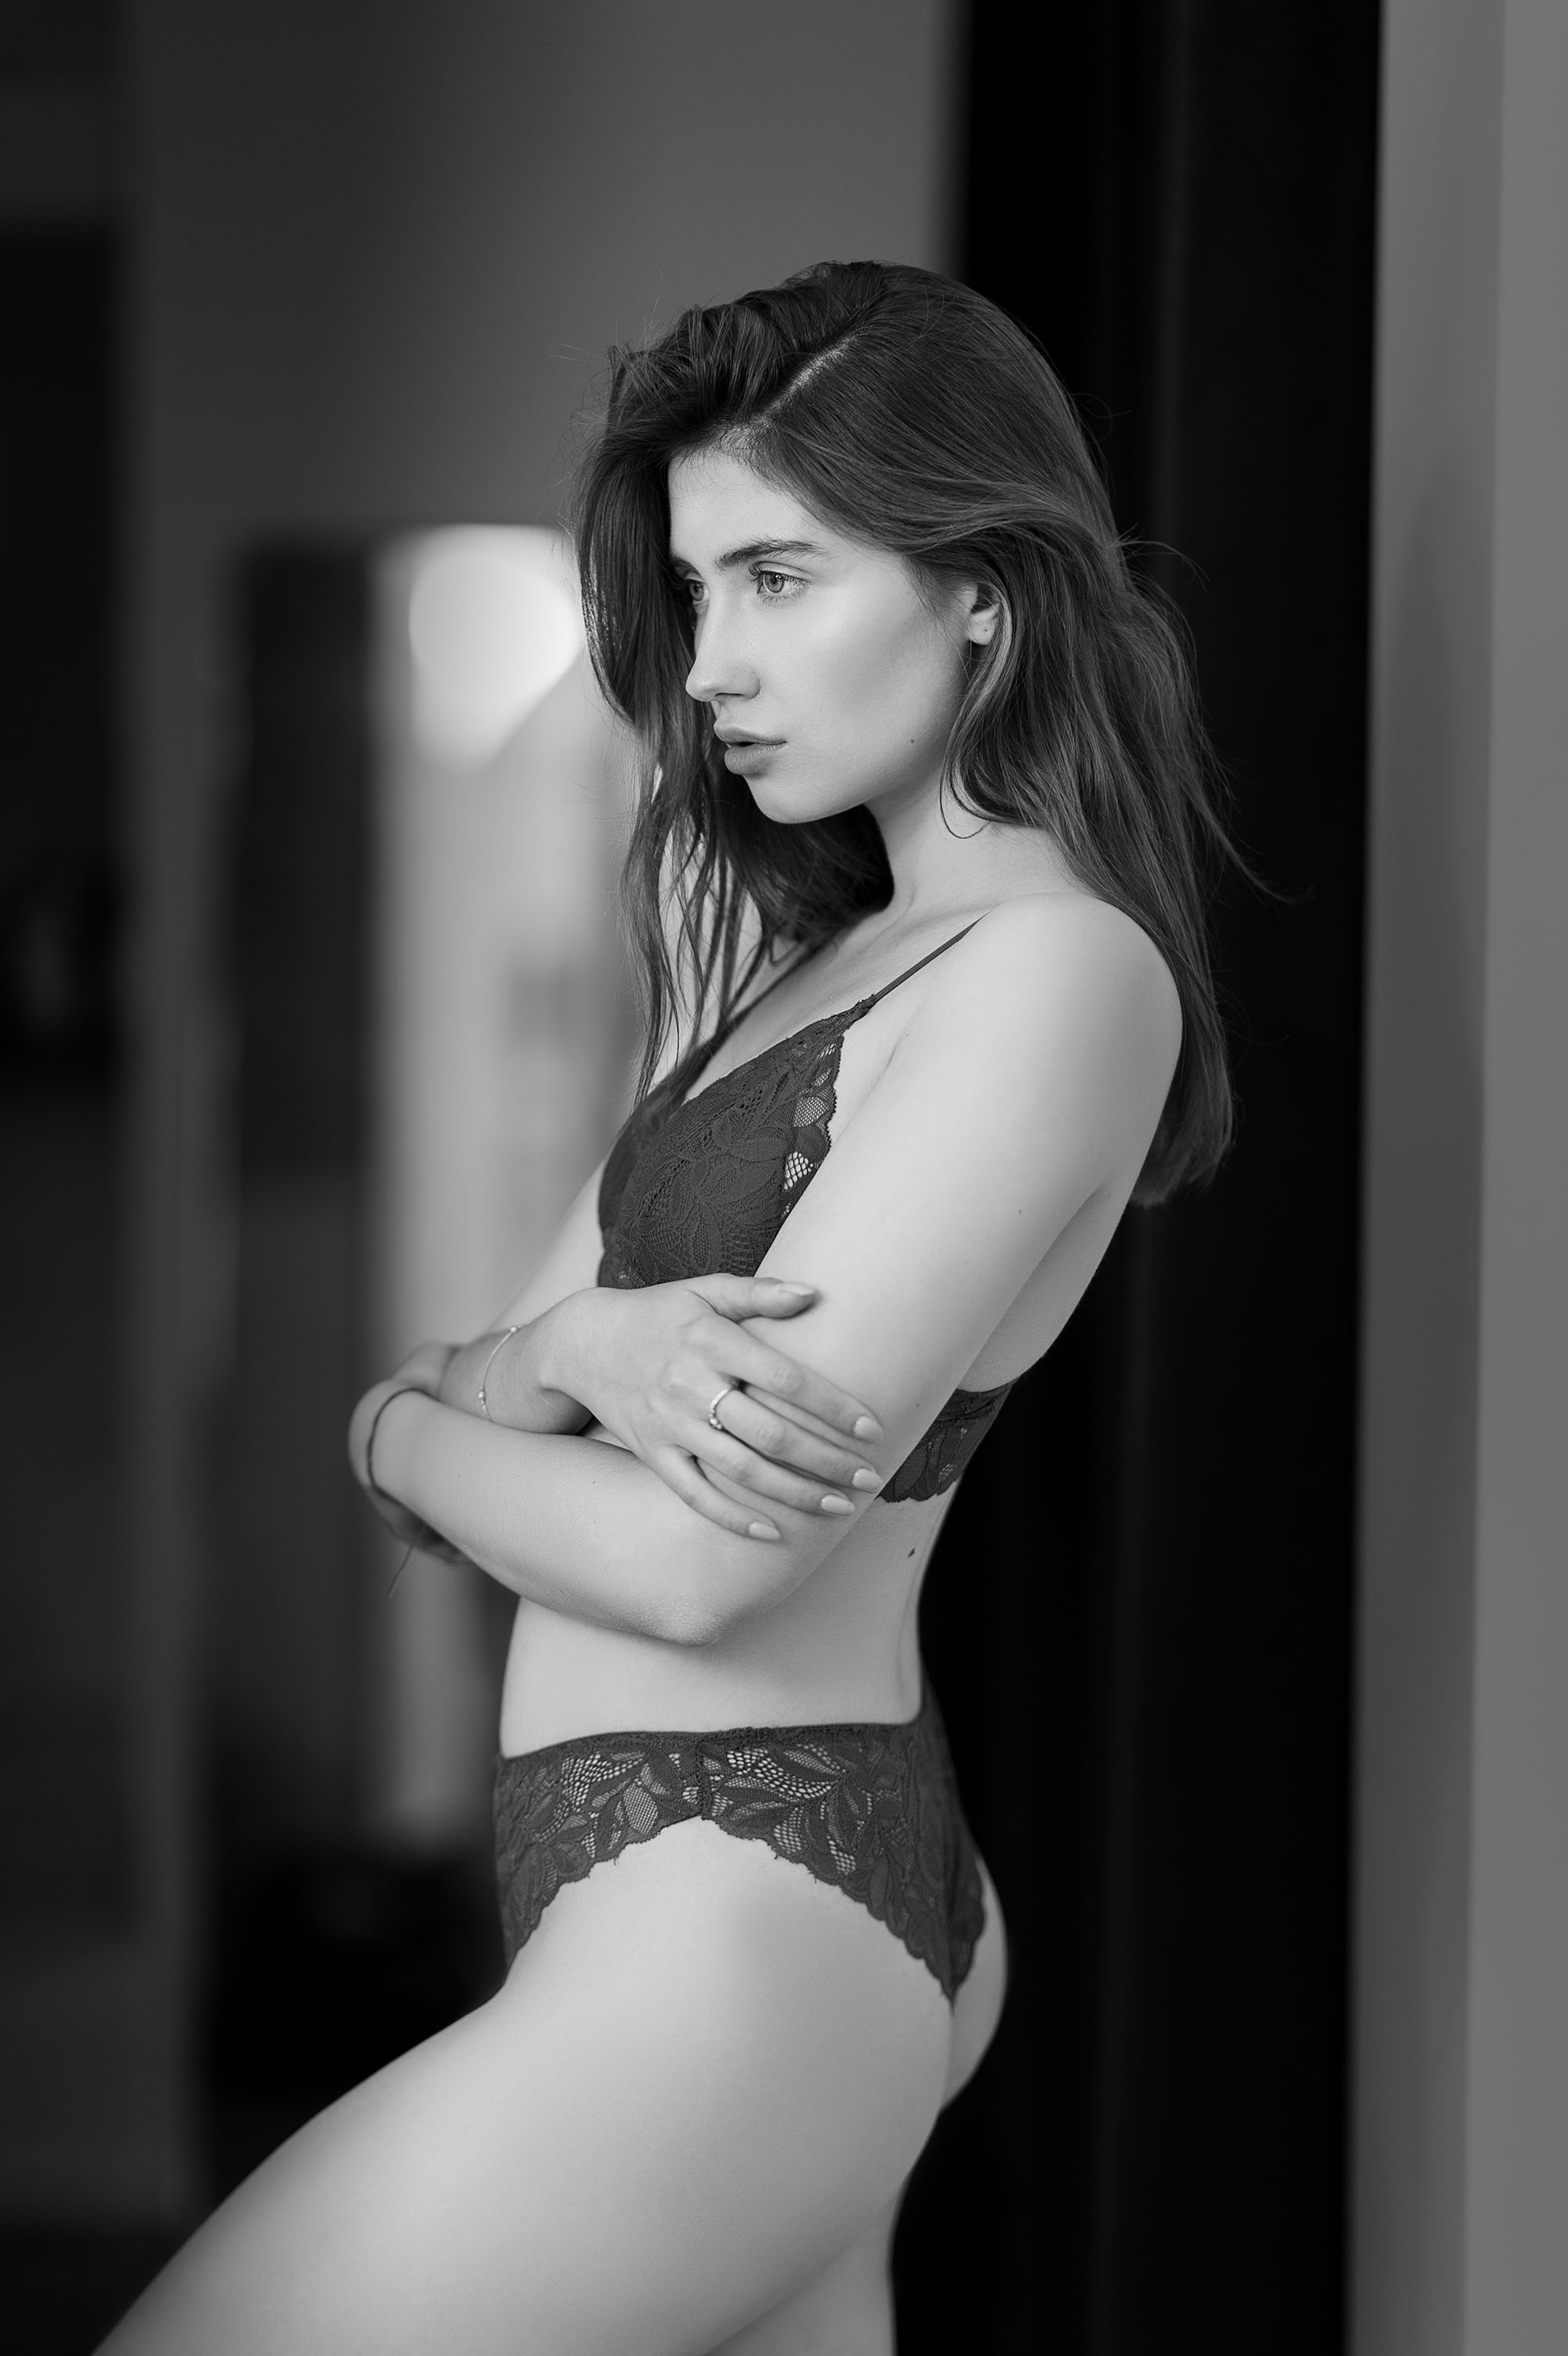 Alessandra Pokropyvna, model from Ukraine at a boudoir photoshoot